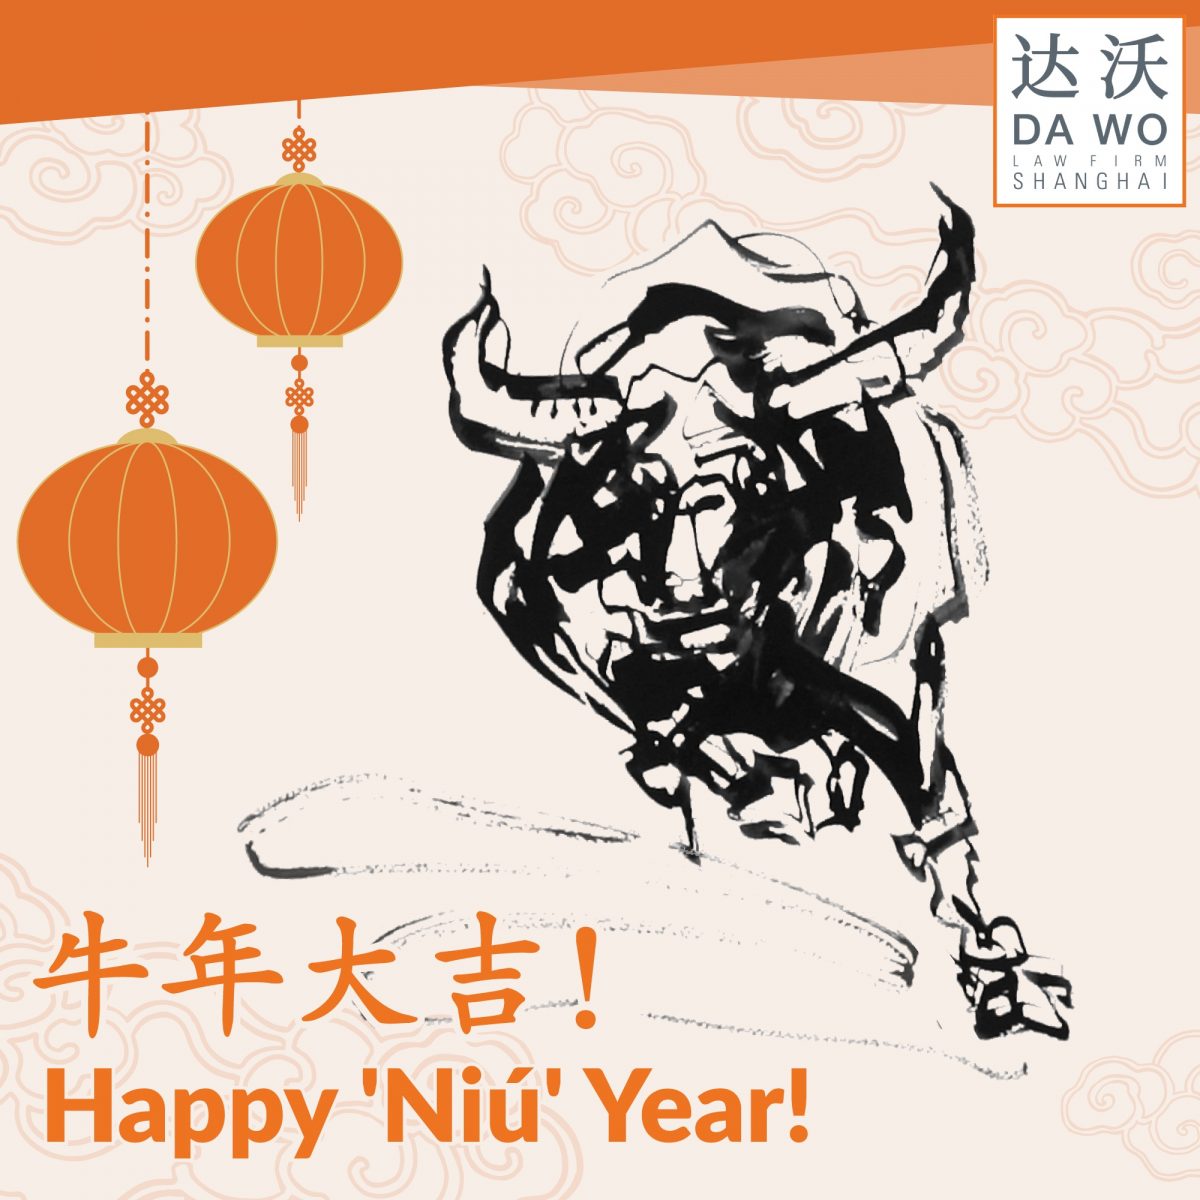 DaWo Law Firm wishes you a Happy“Niú”Year!